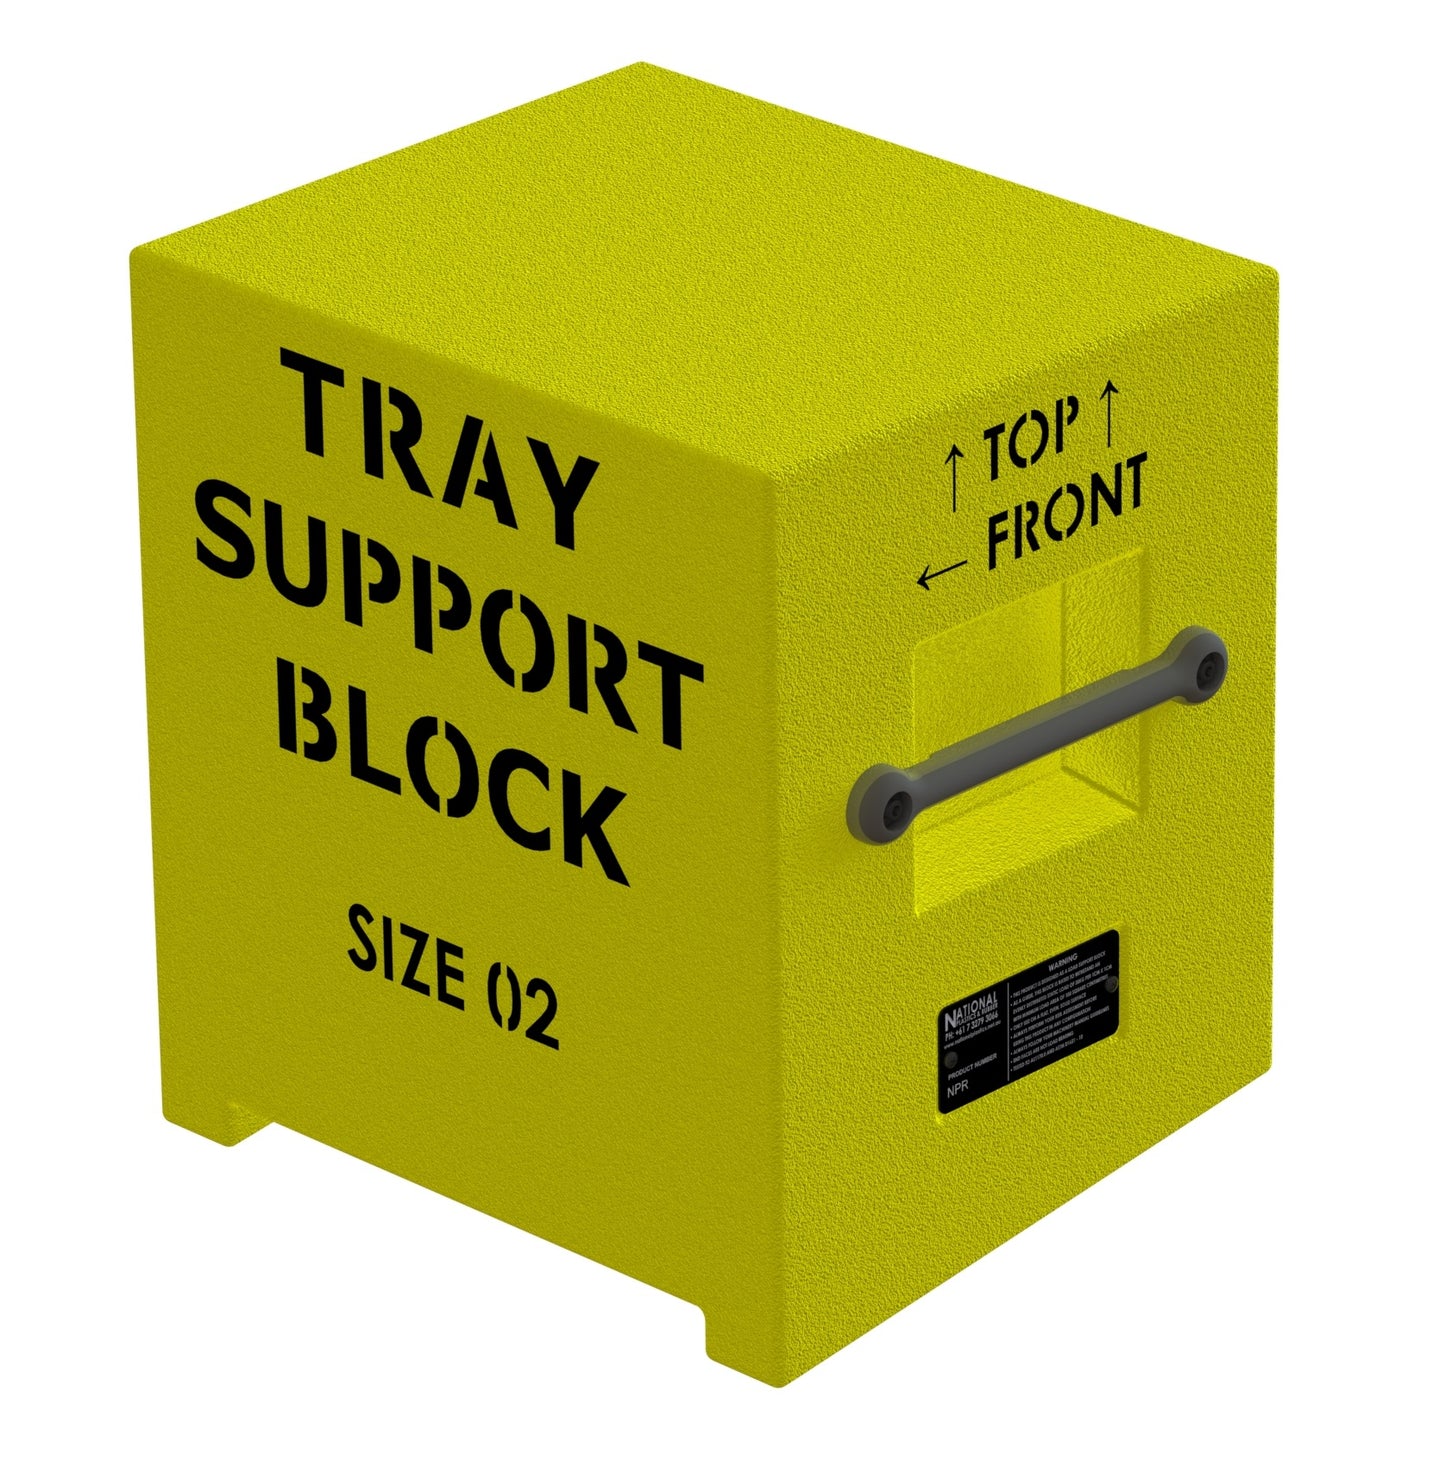 Tray Support Blocks